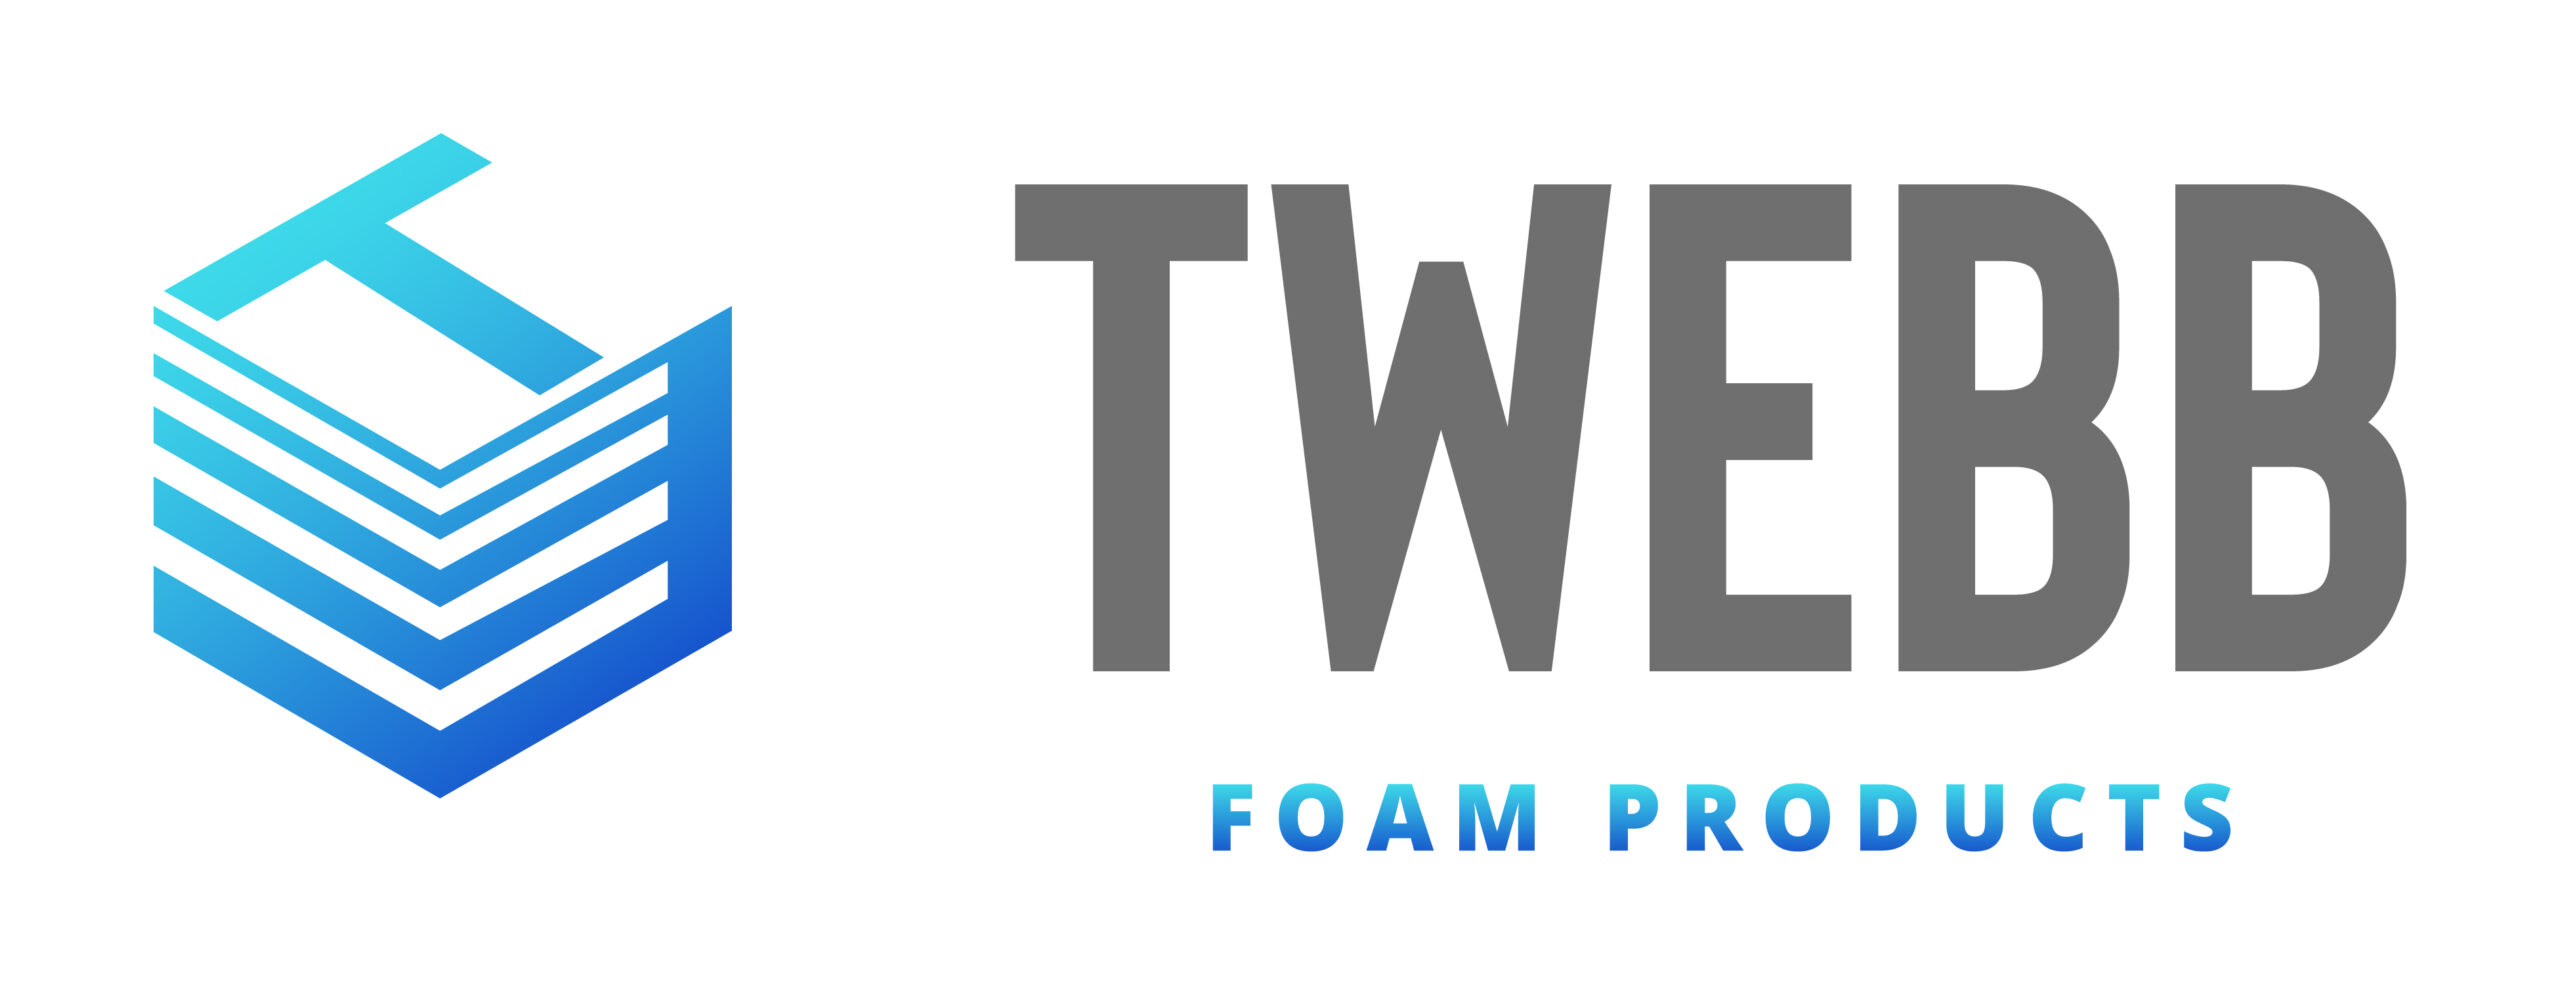 TWEBB Construction Logo